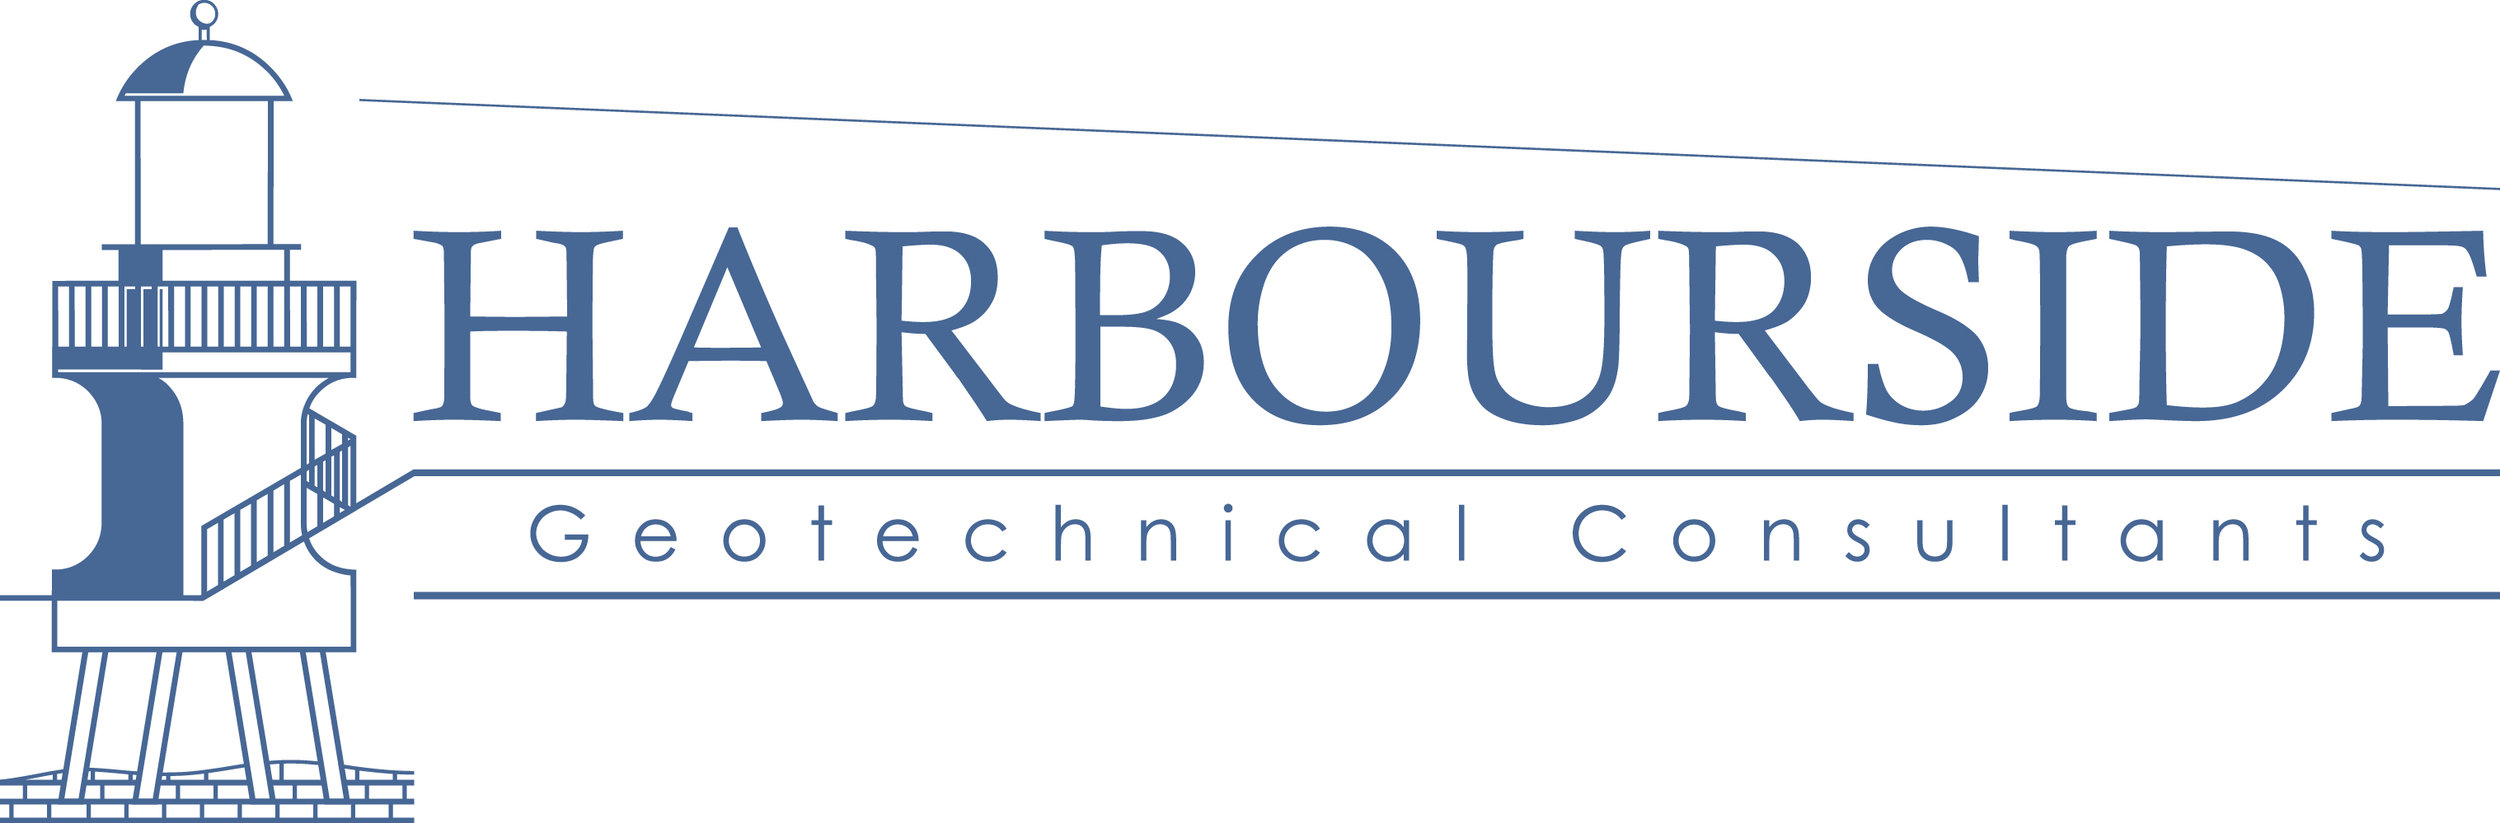 Harbourside Geotechnical Consultants Logo - Blue RGB.jpg